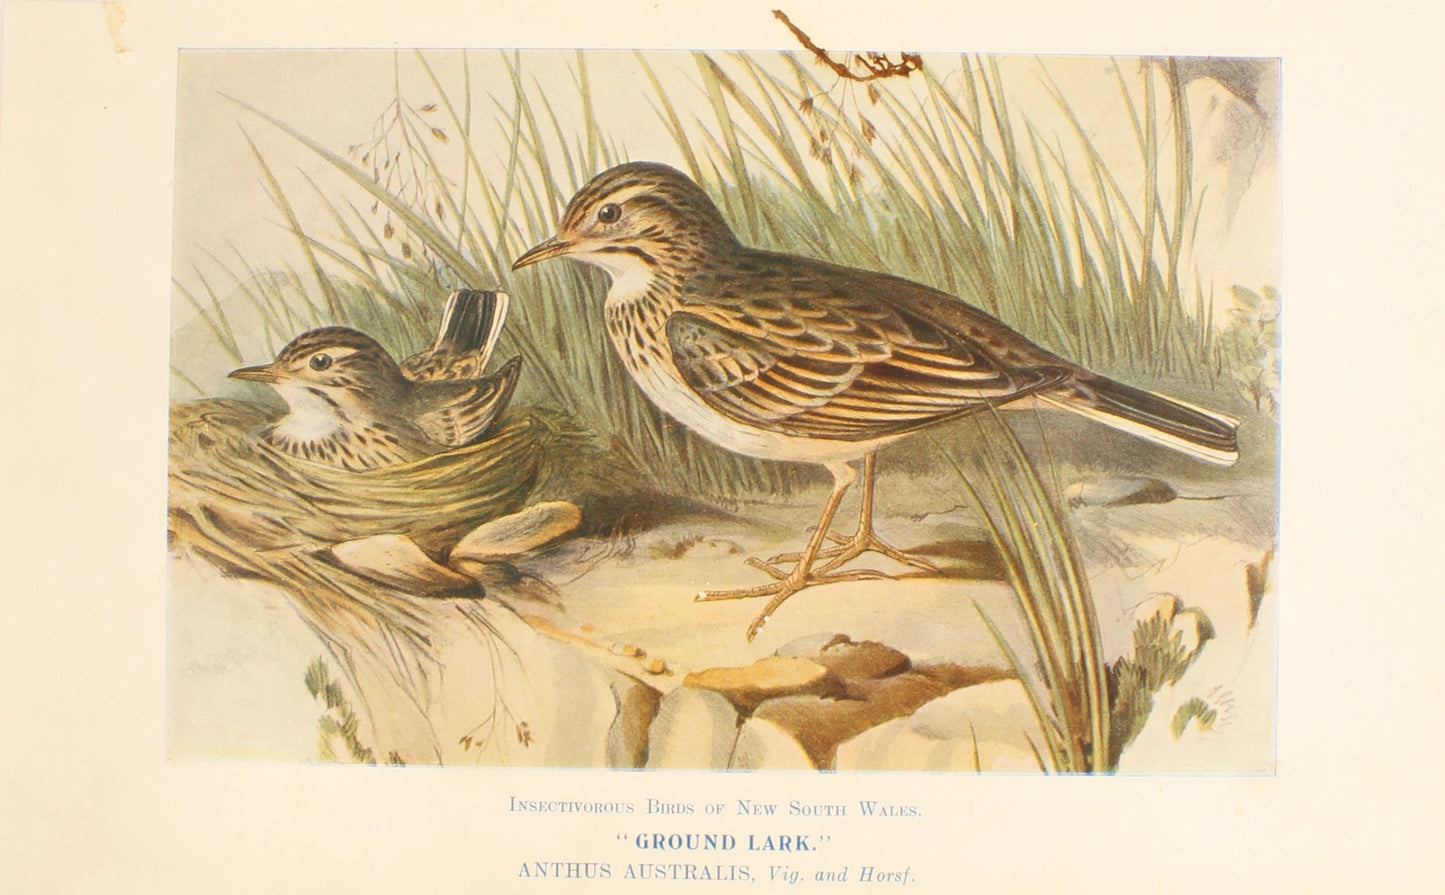 Bird, North, Alfred John, Ground Lark, Insectiverous Birds of NSW, 1896-7 1896-7